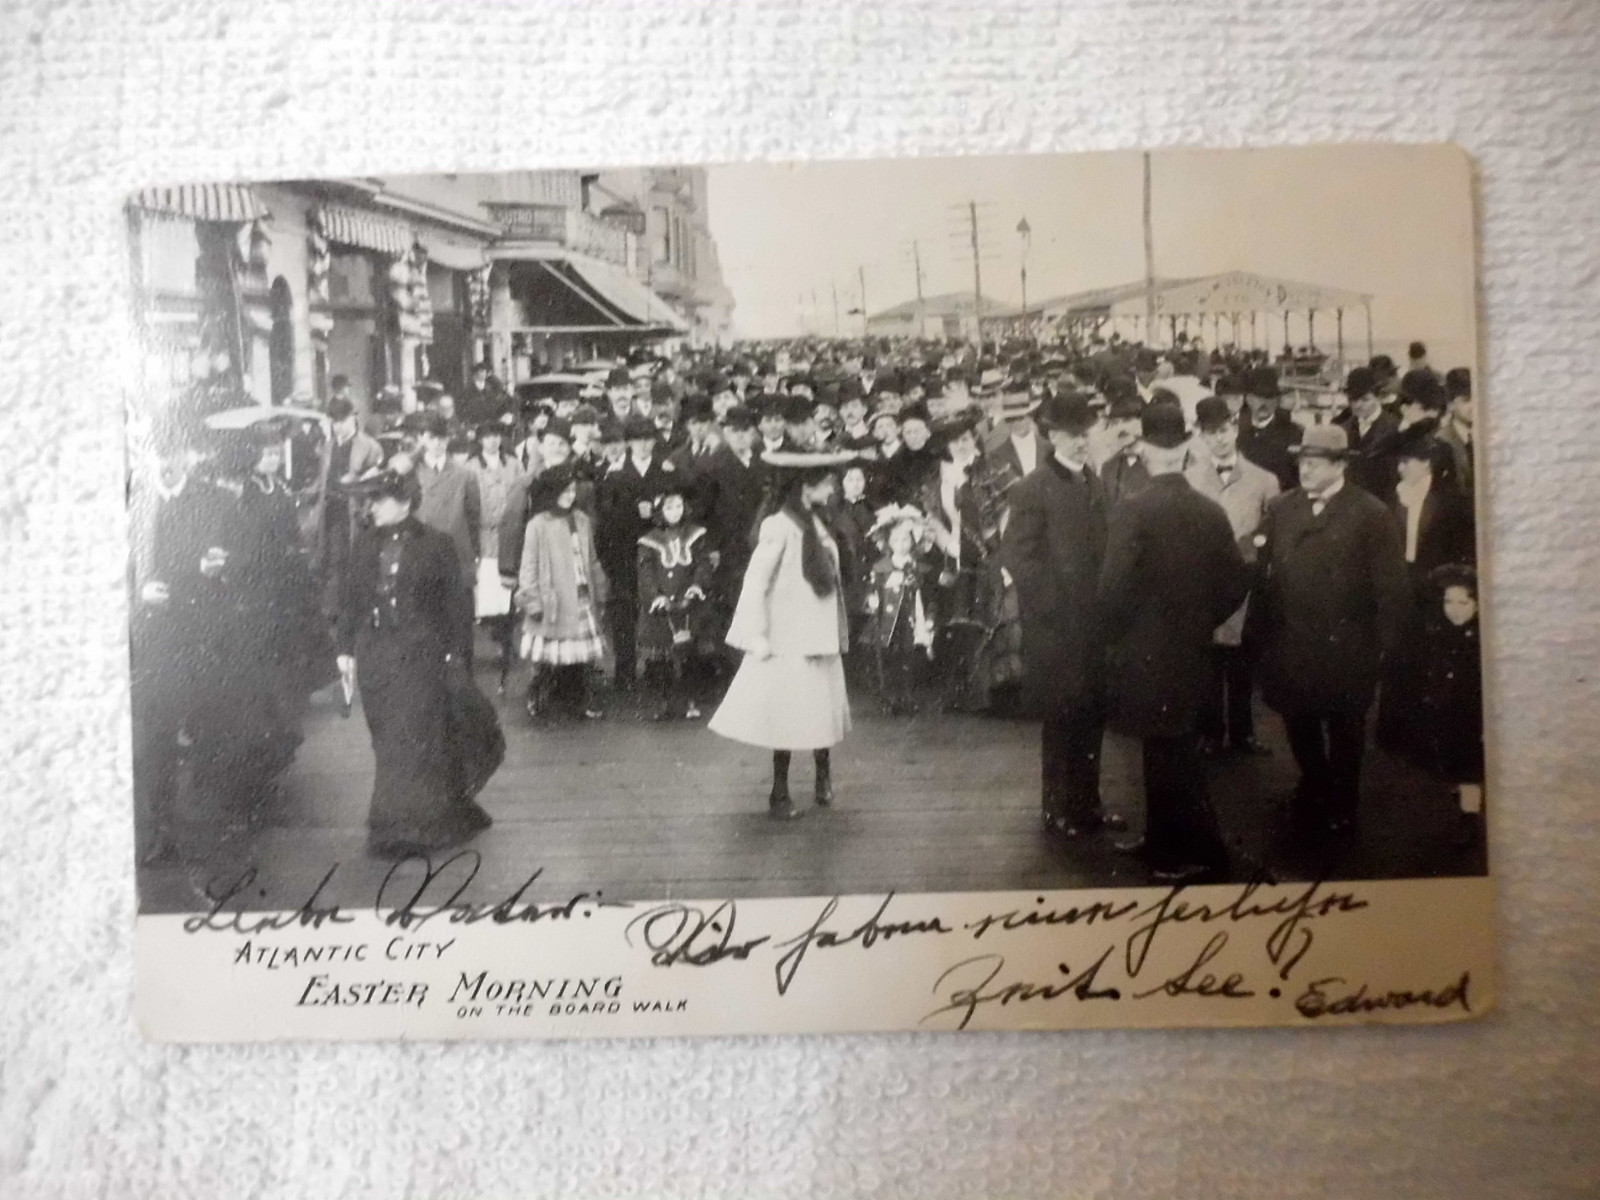 Atlantic City - Easter Morning on the Board Walk - 1906